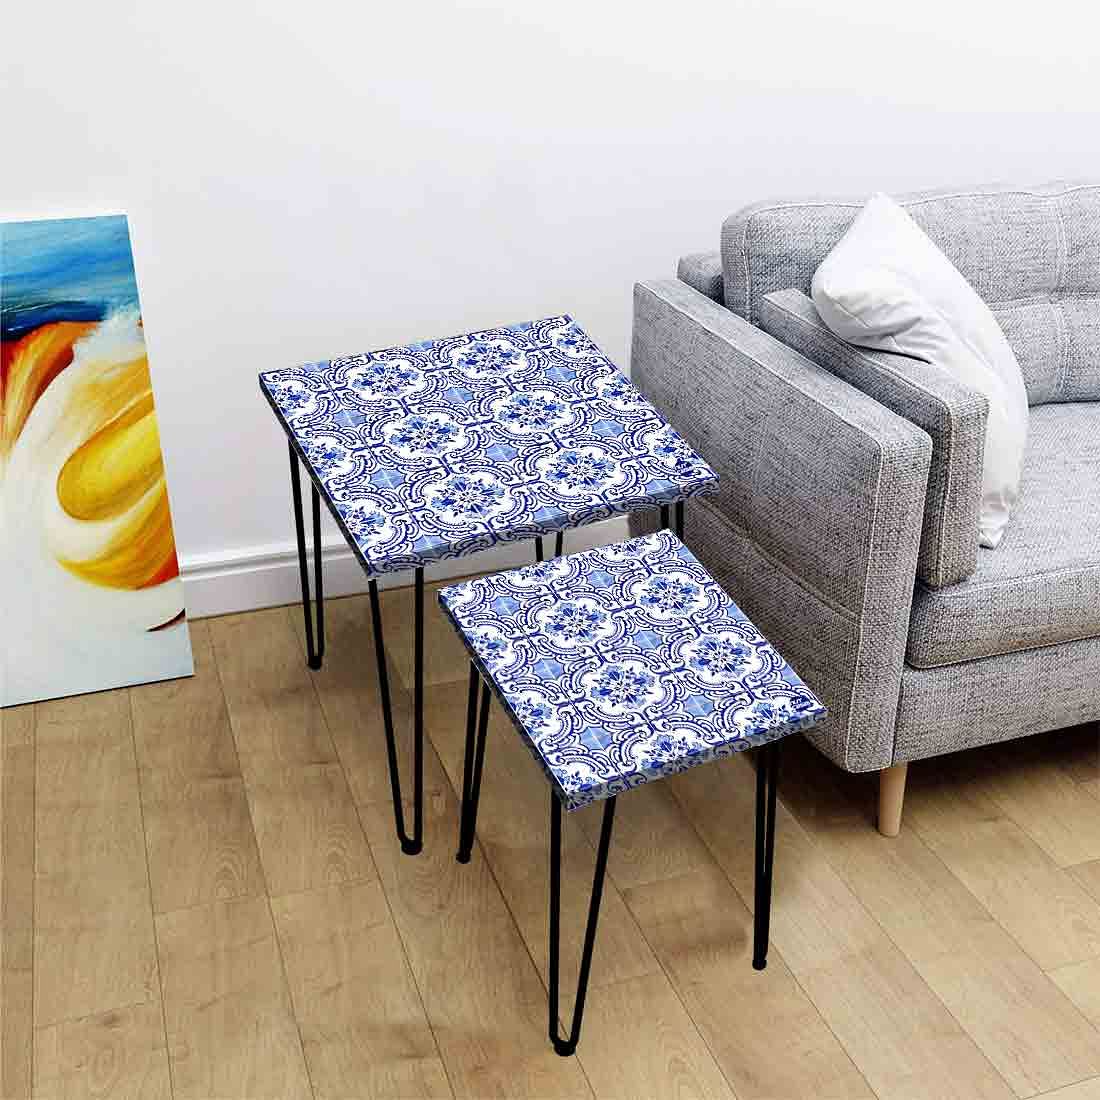 Designer Coffee Table Nesting Set of Two for Living Room - Goa Casa Nutcase